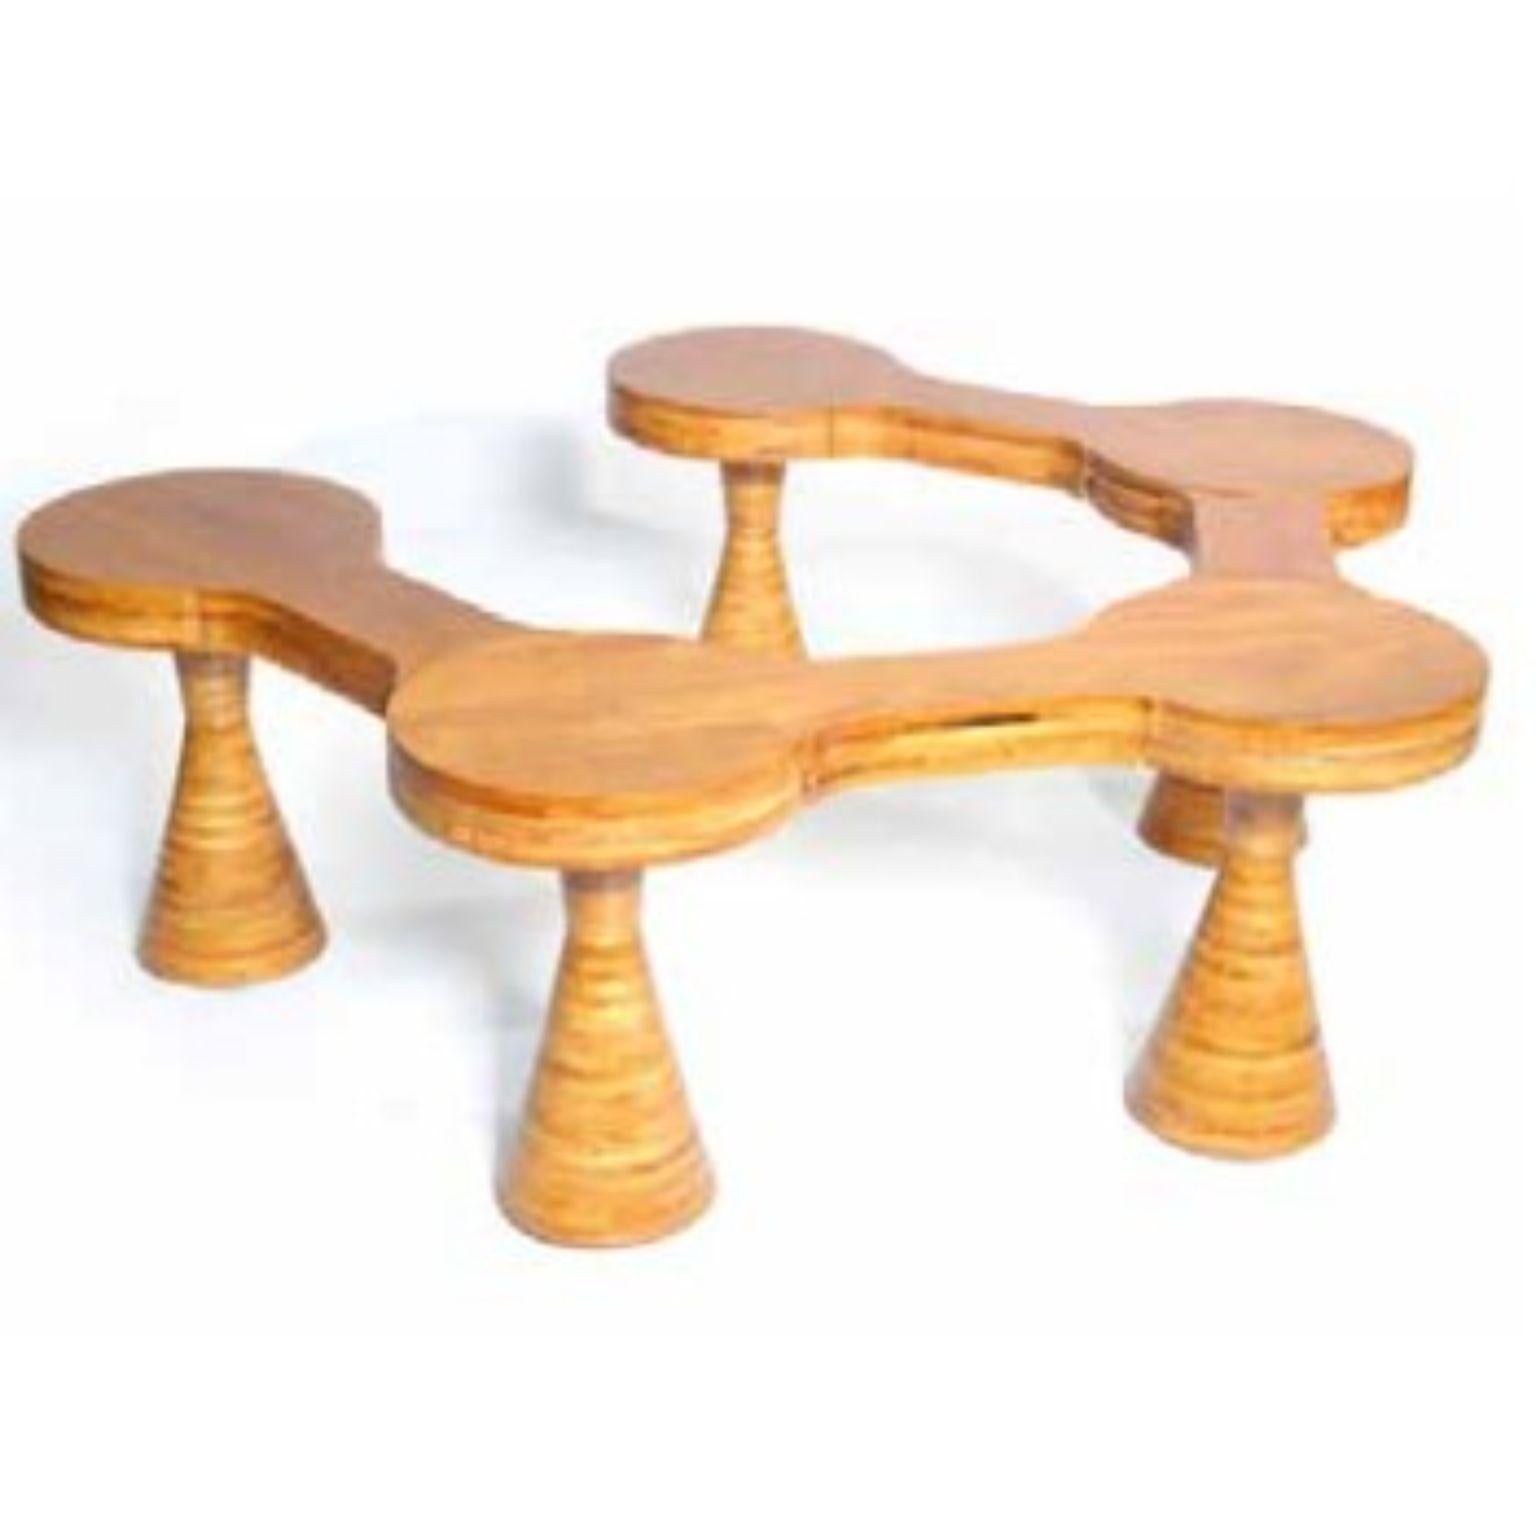 Ambuá 5p bench / coffee table by Mameluca
Material: Vinhático wood
Dimensions: D180x W86 x H47 cm

Ambuá means 